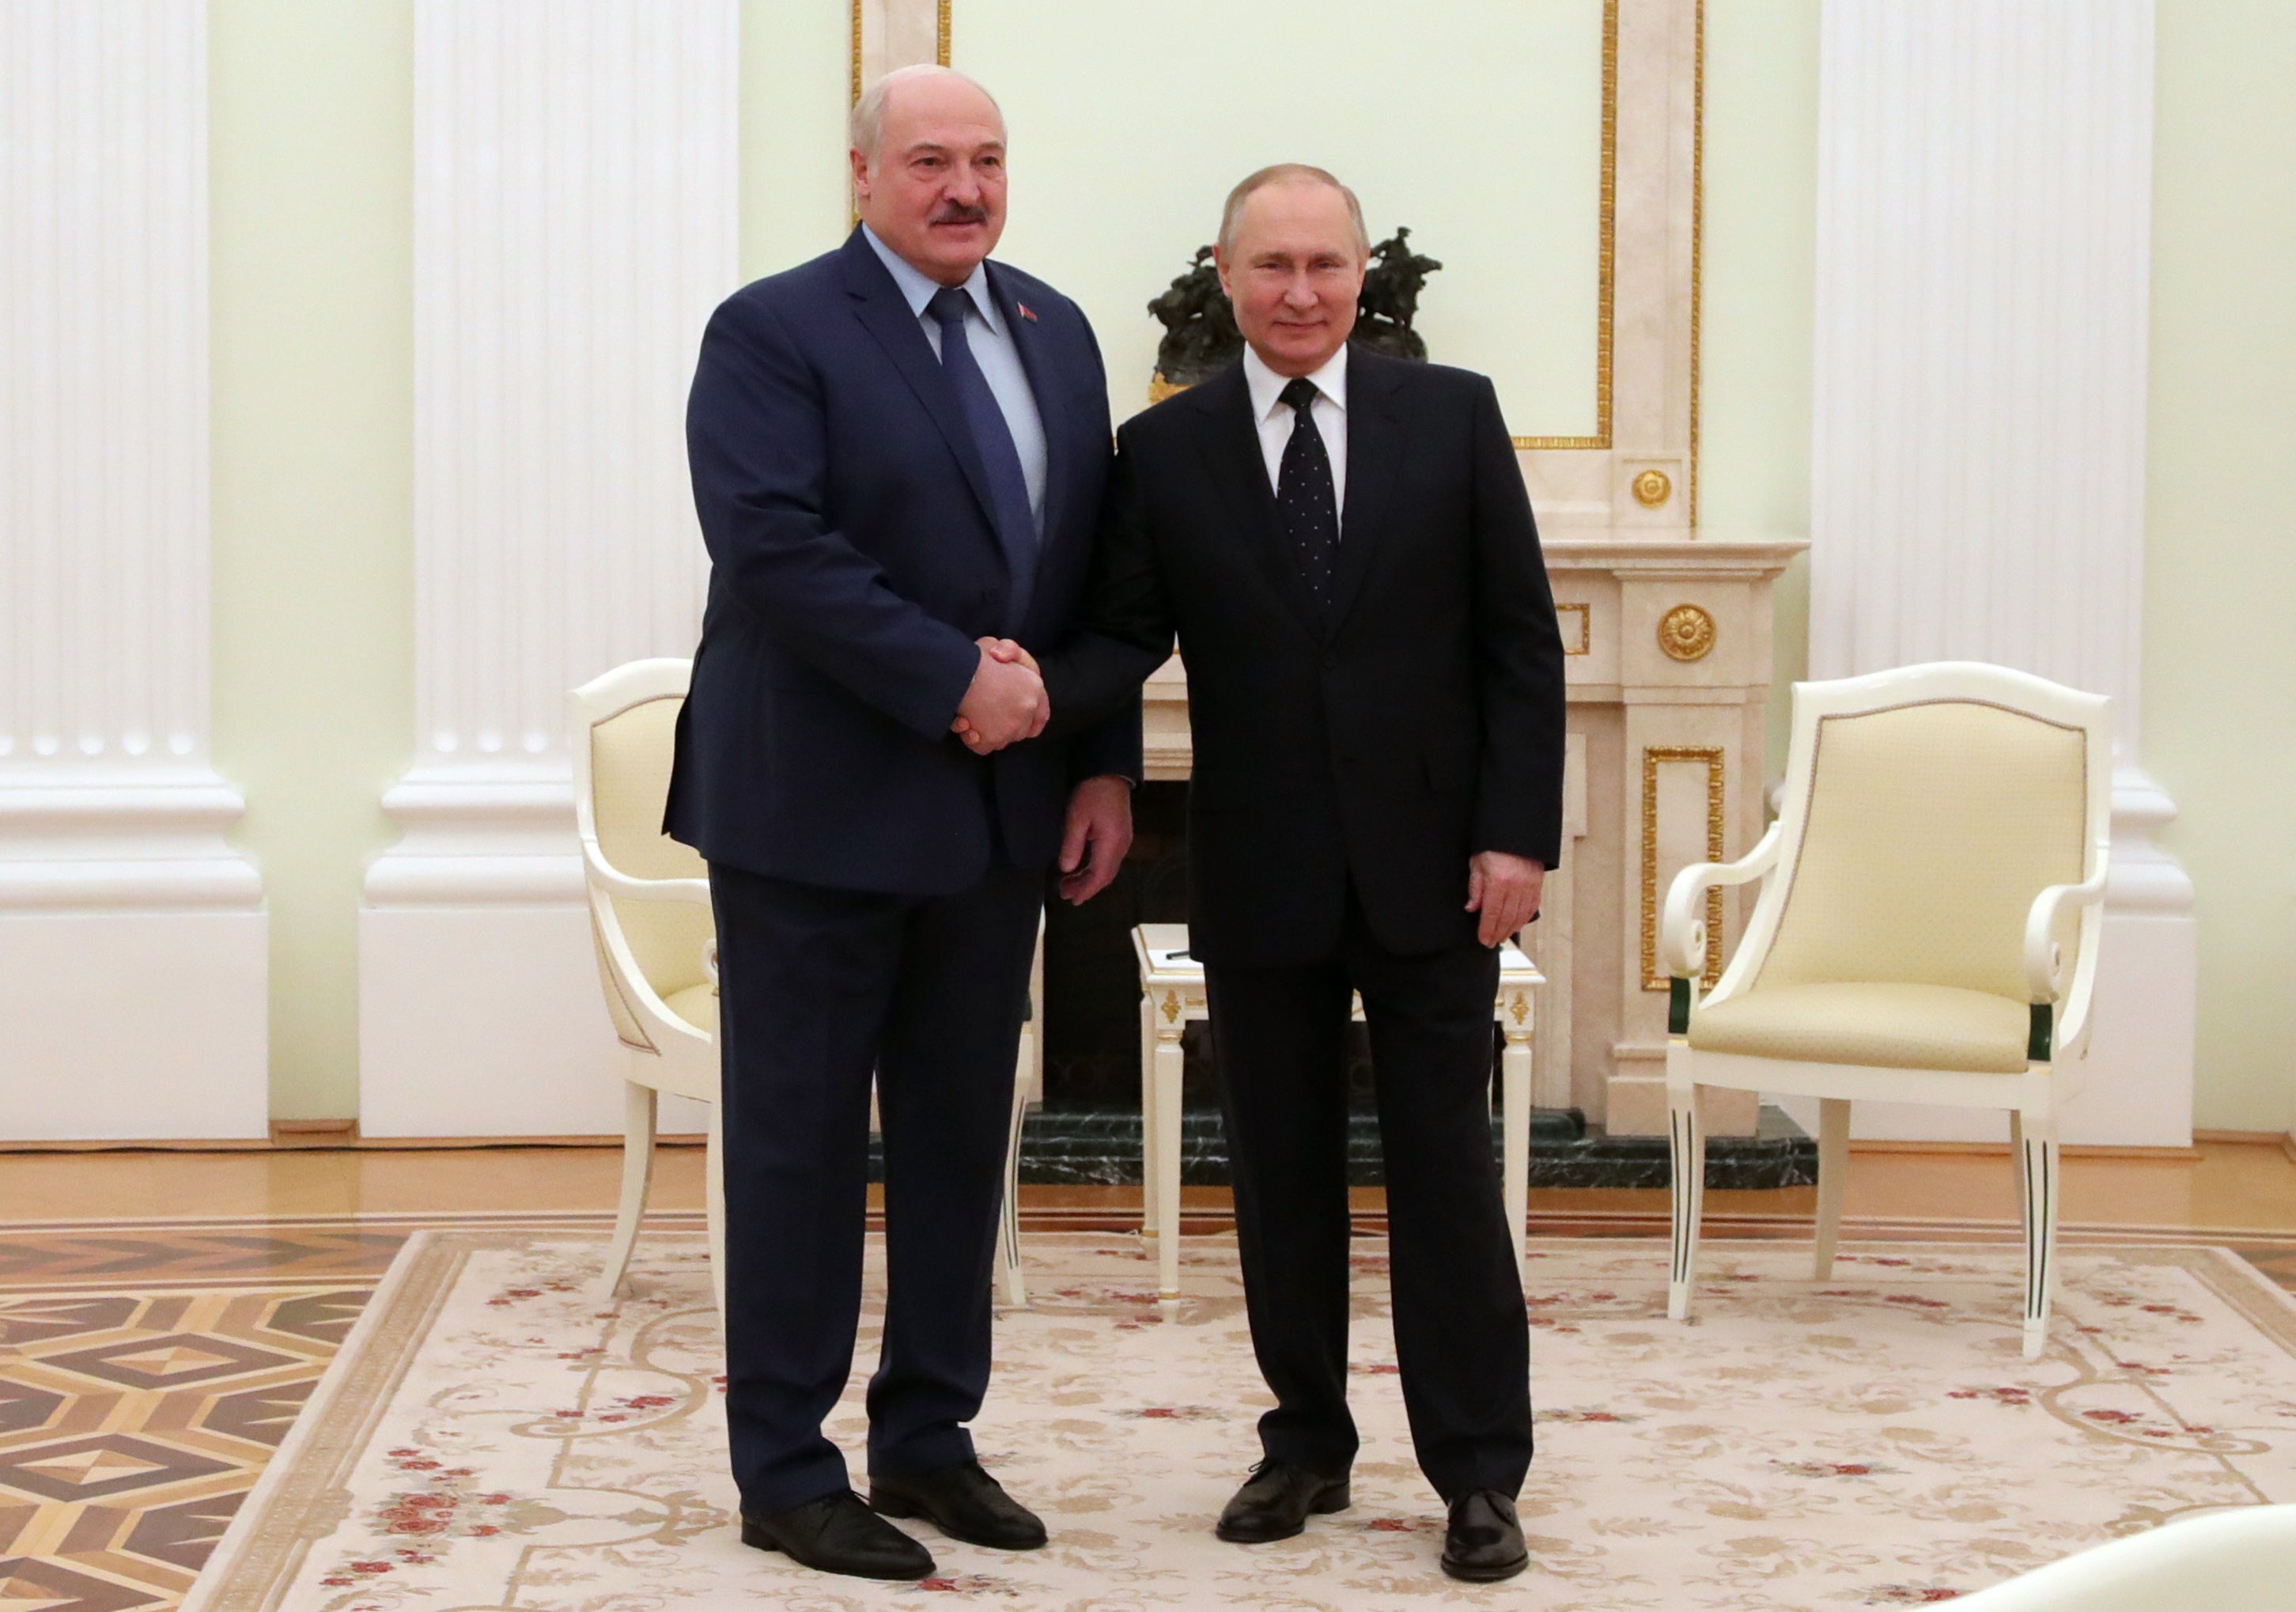 Friends indeed: Belarusian President Alexander Lukashenko and Russian President Vladimir Putin